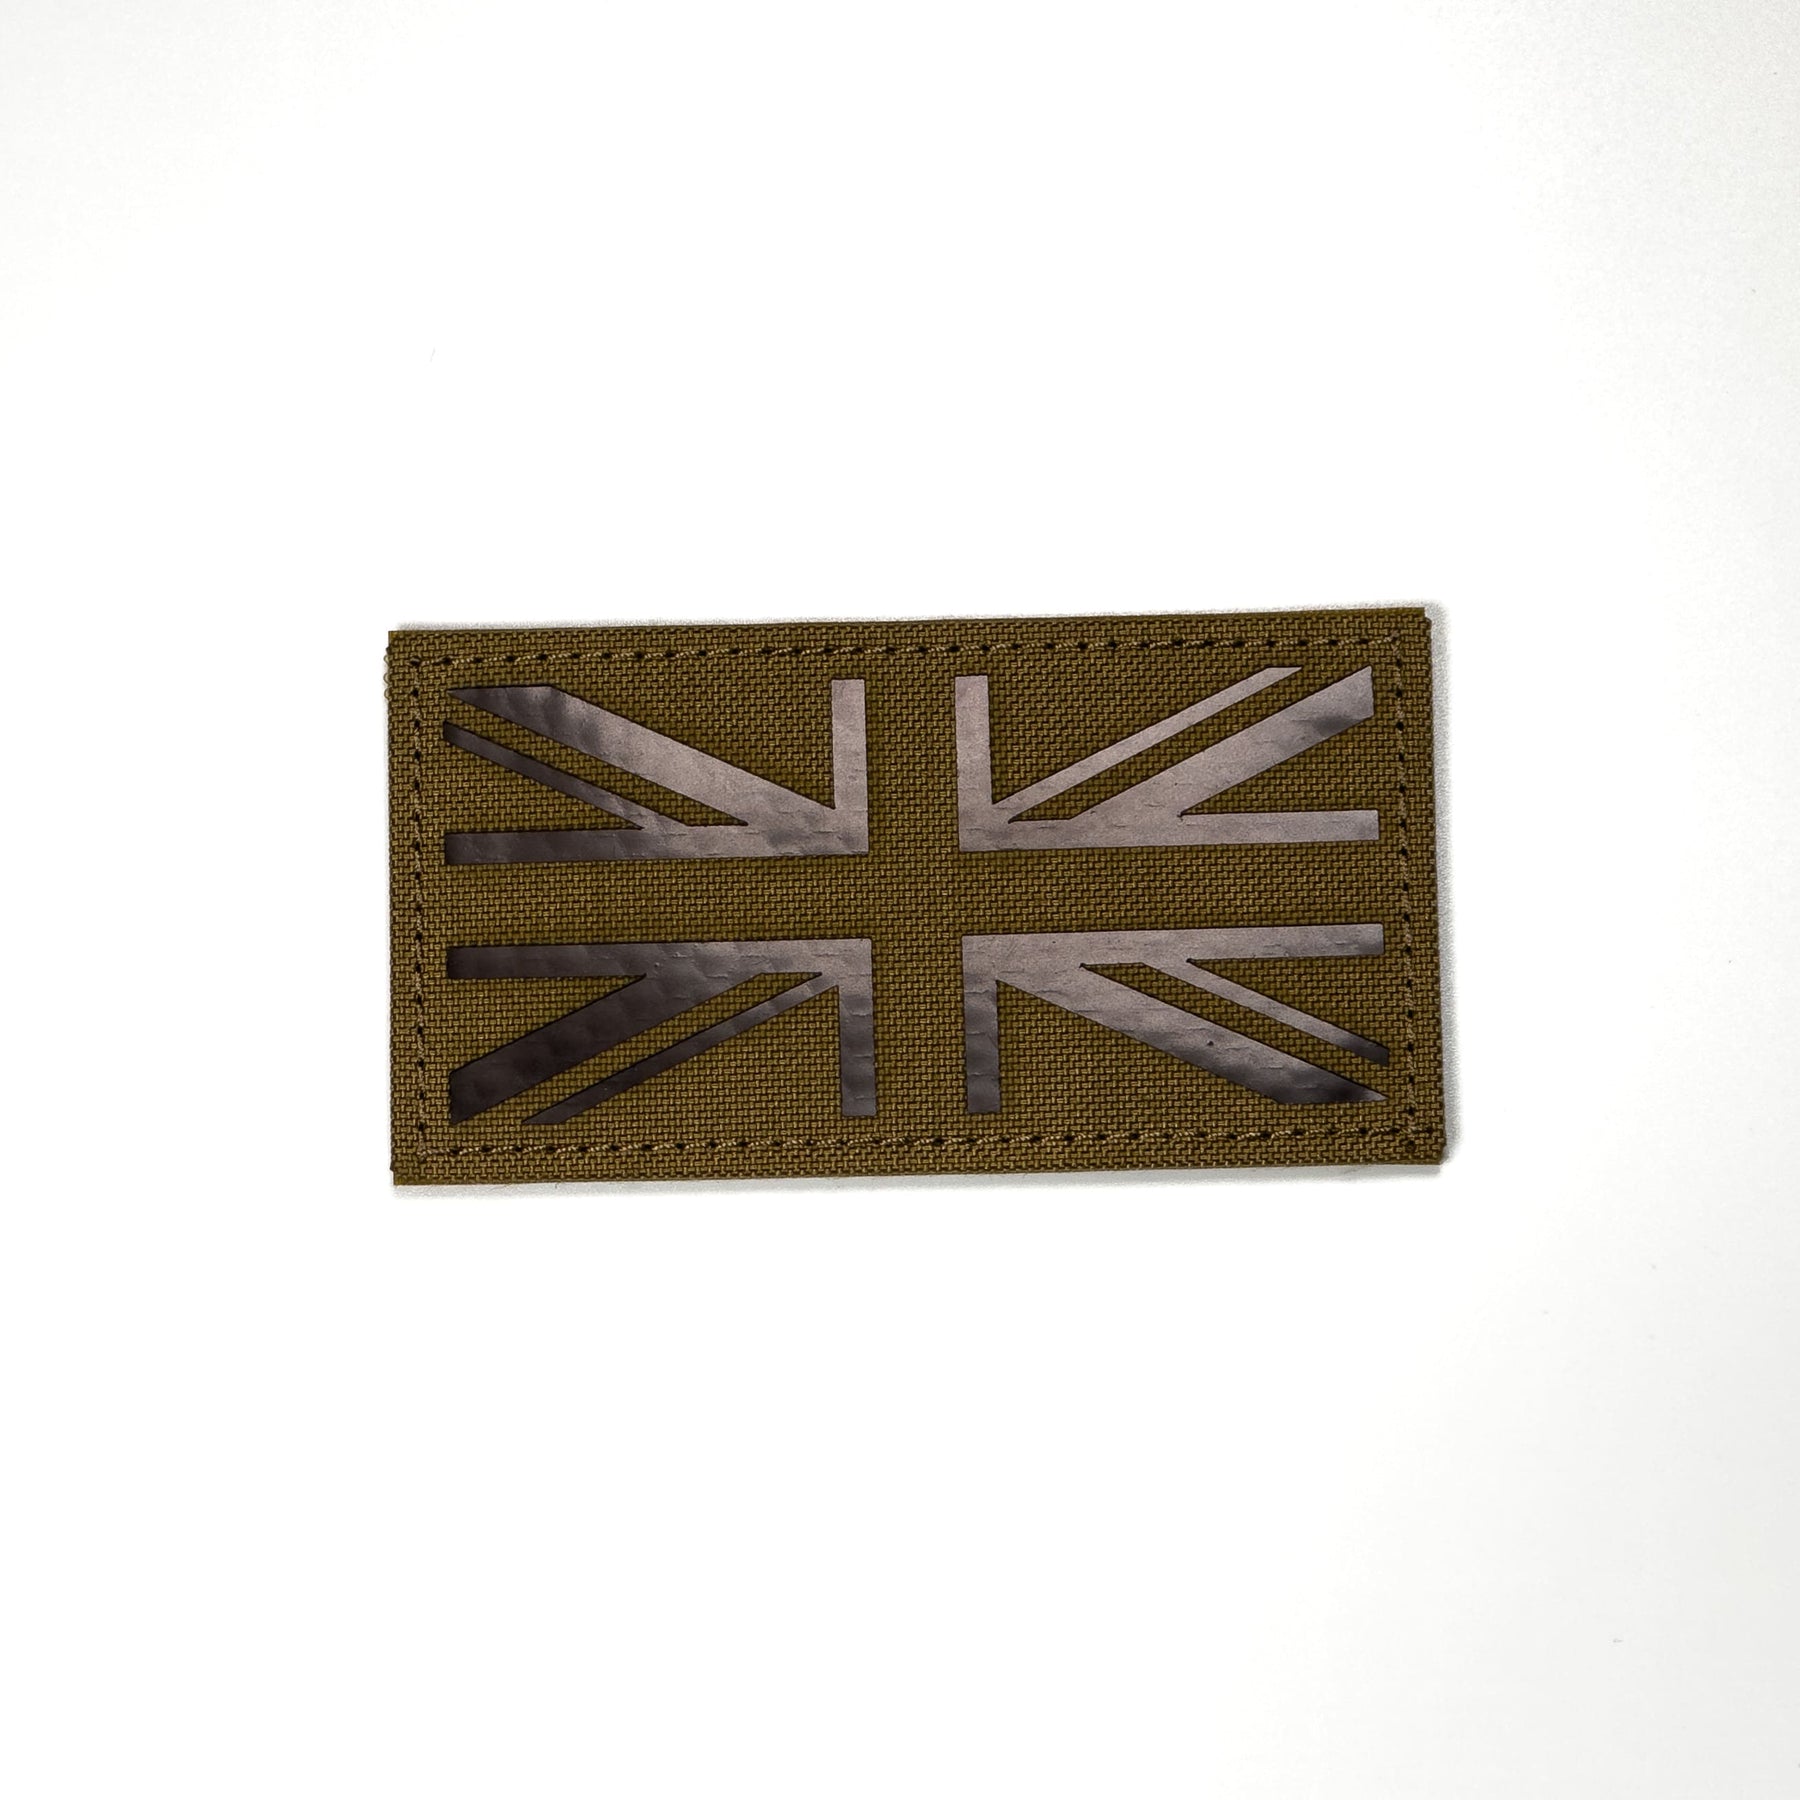 United Kingdom Flag Patch (Union Jack)